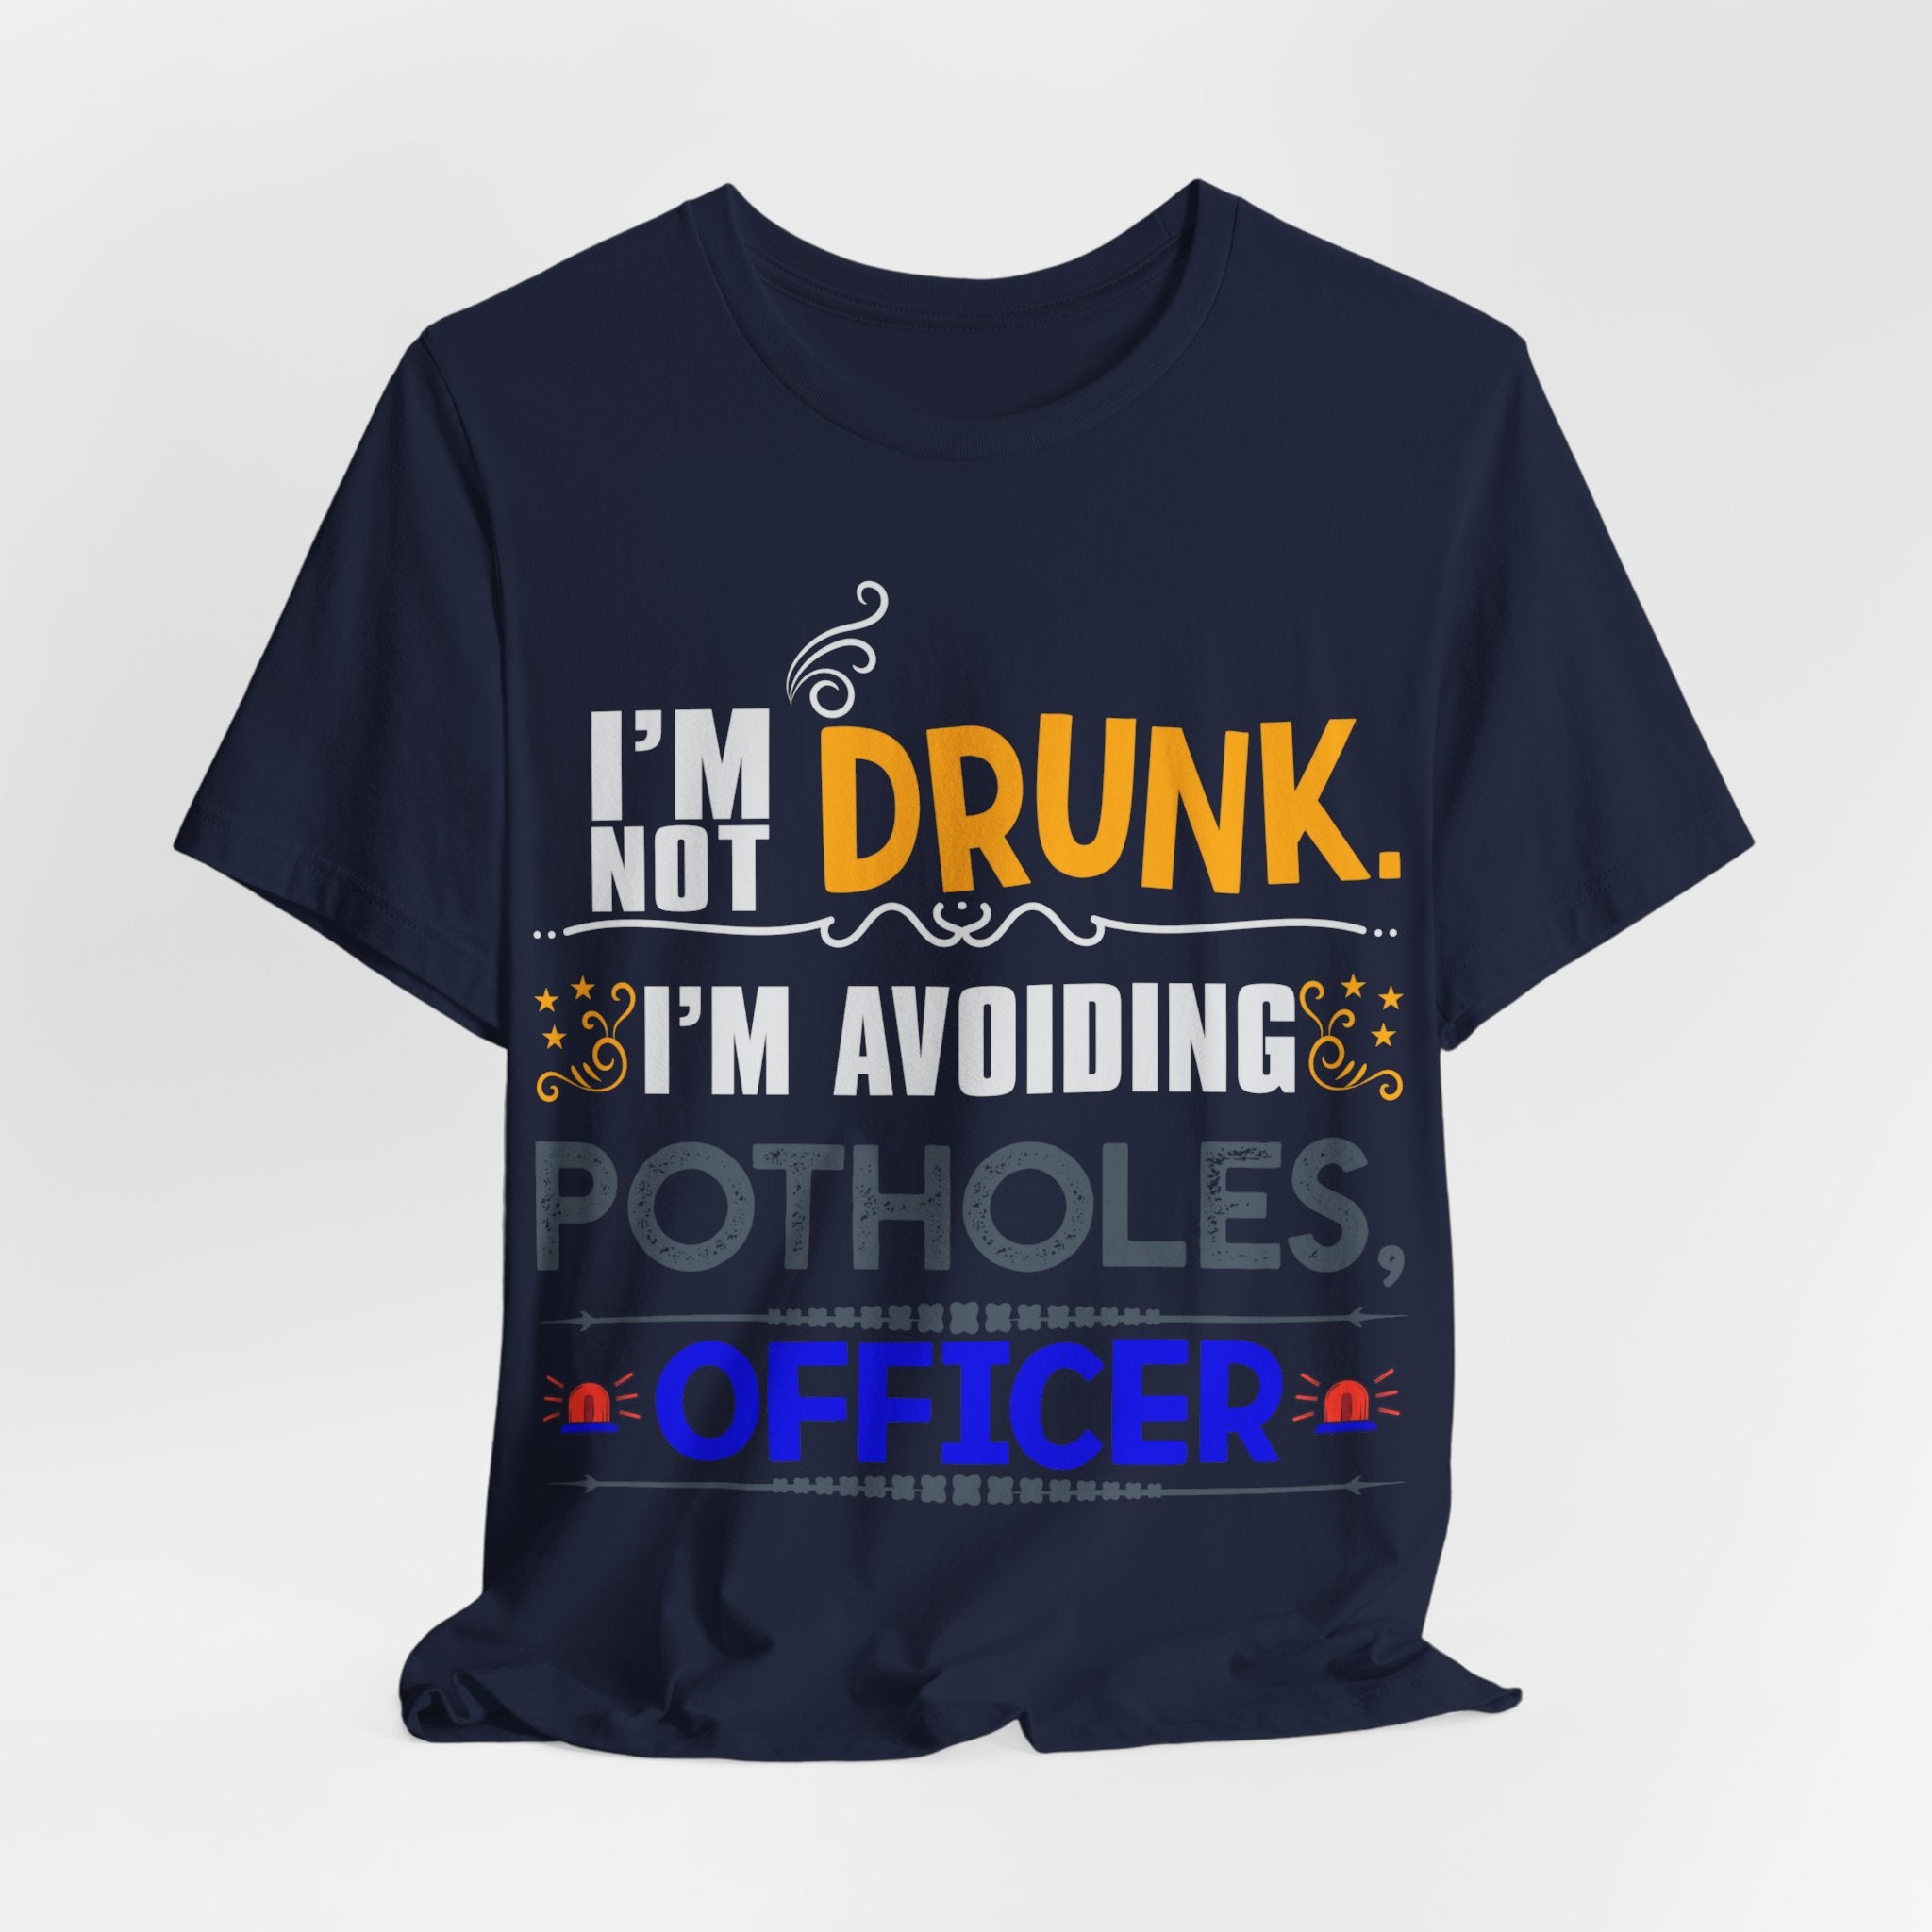 Not Drunk - Avoiding Potholes